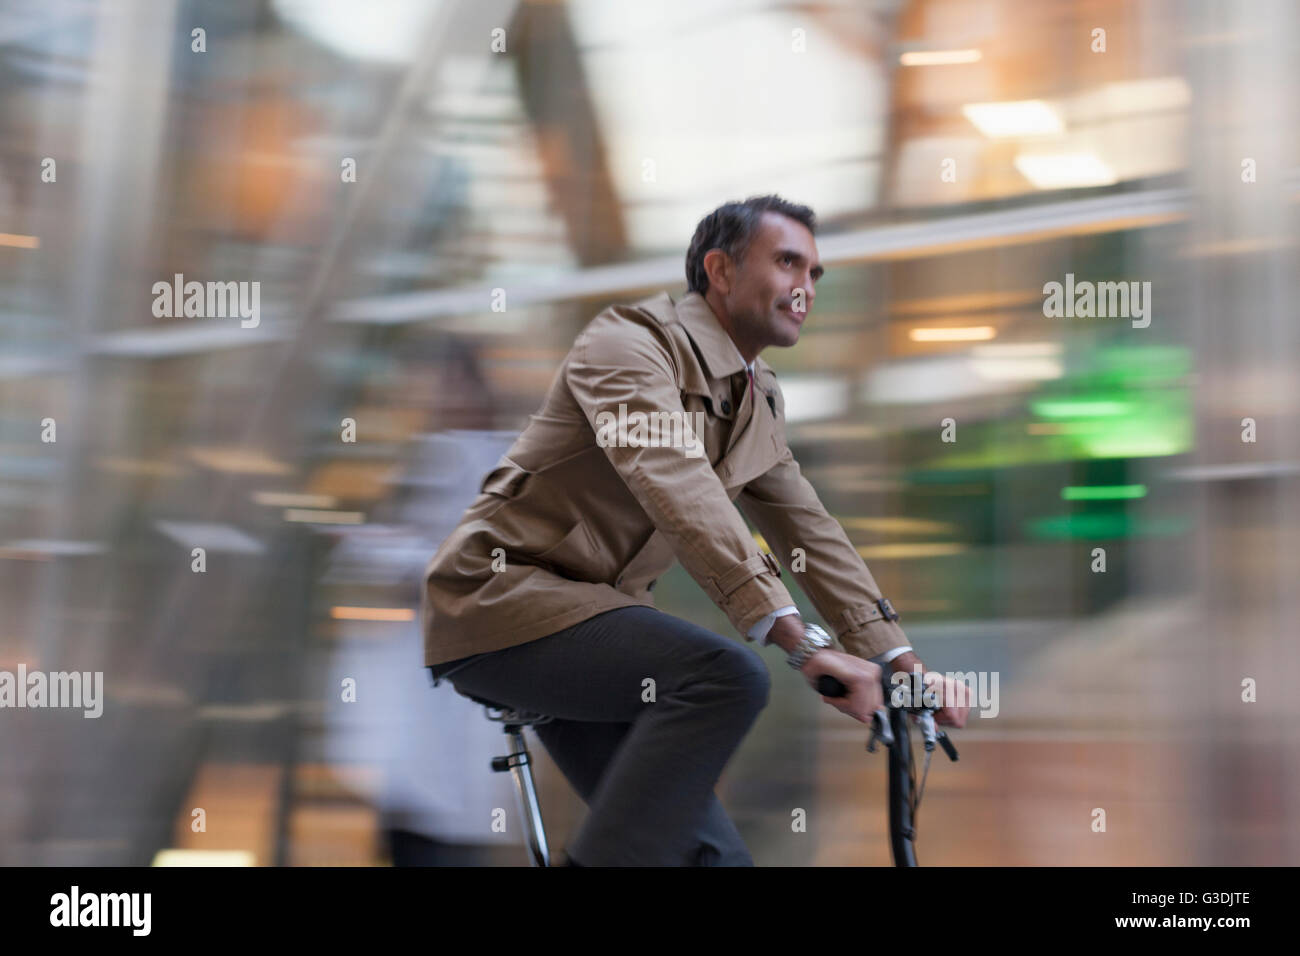 Corporate businessman riding bicycle Stock Photo